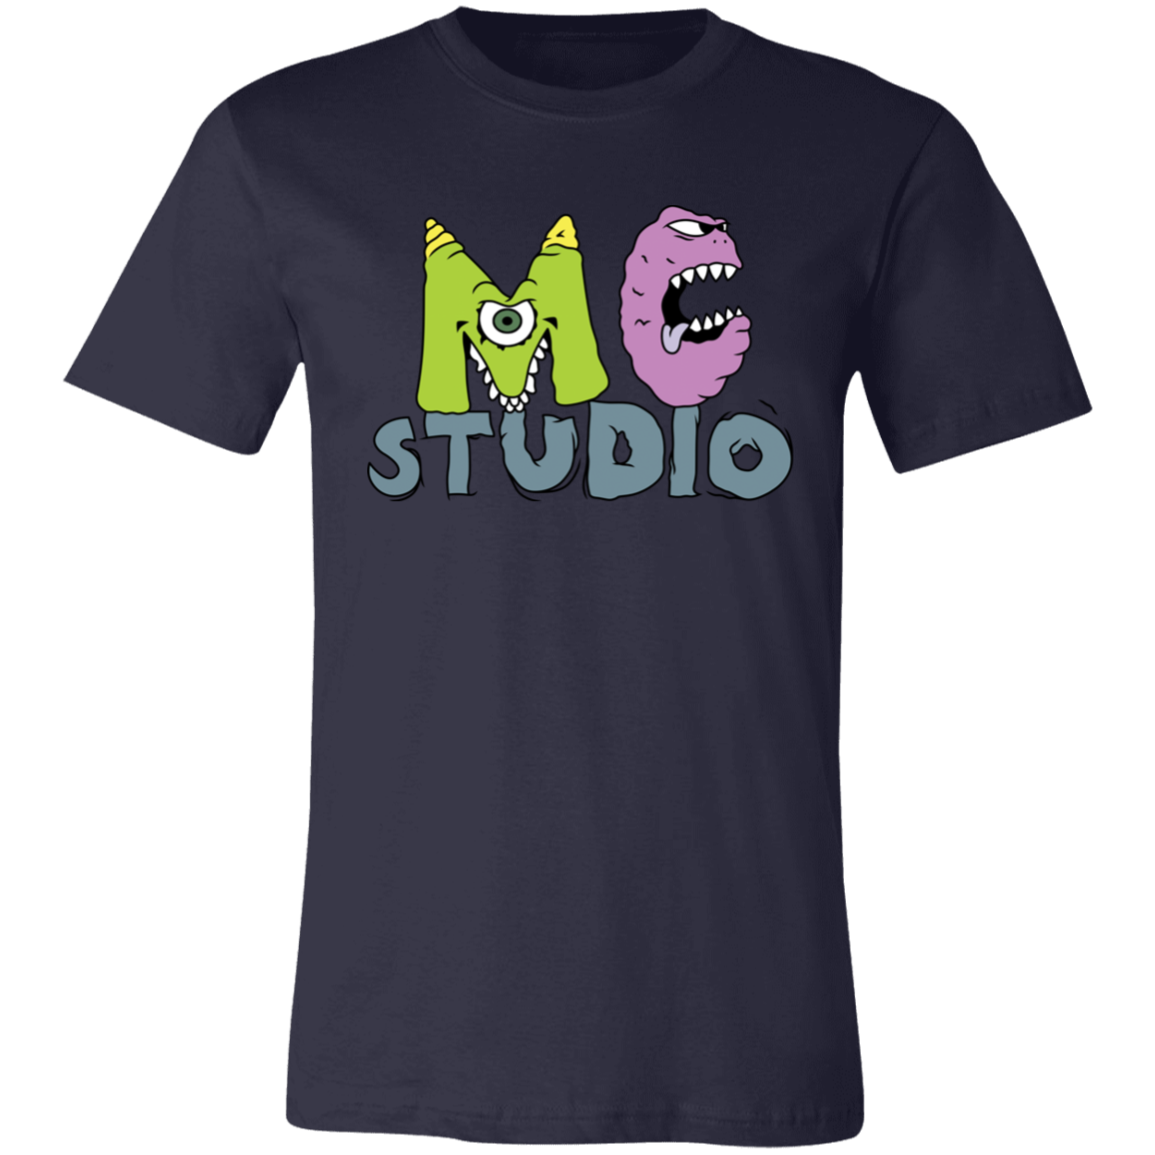 MC Studio Unisex Short-Sleeve